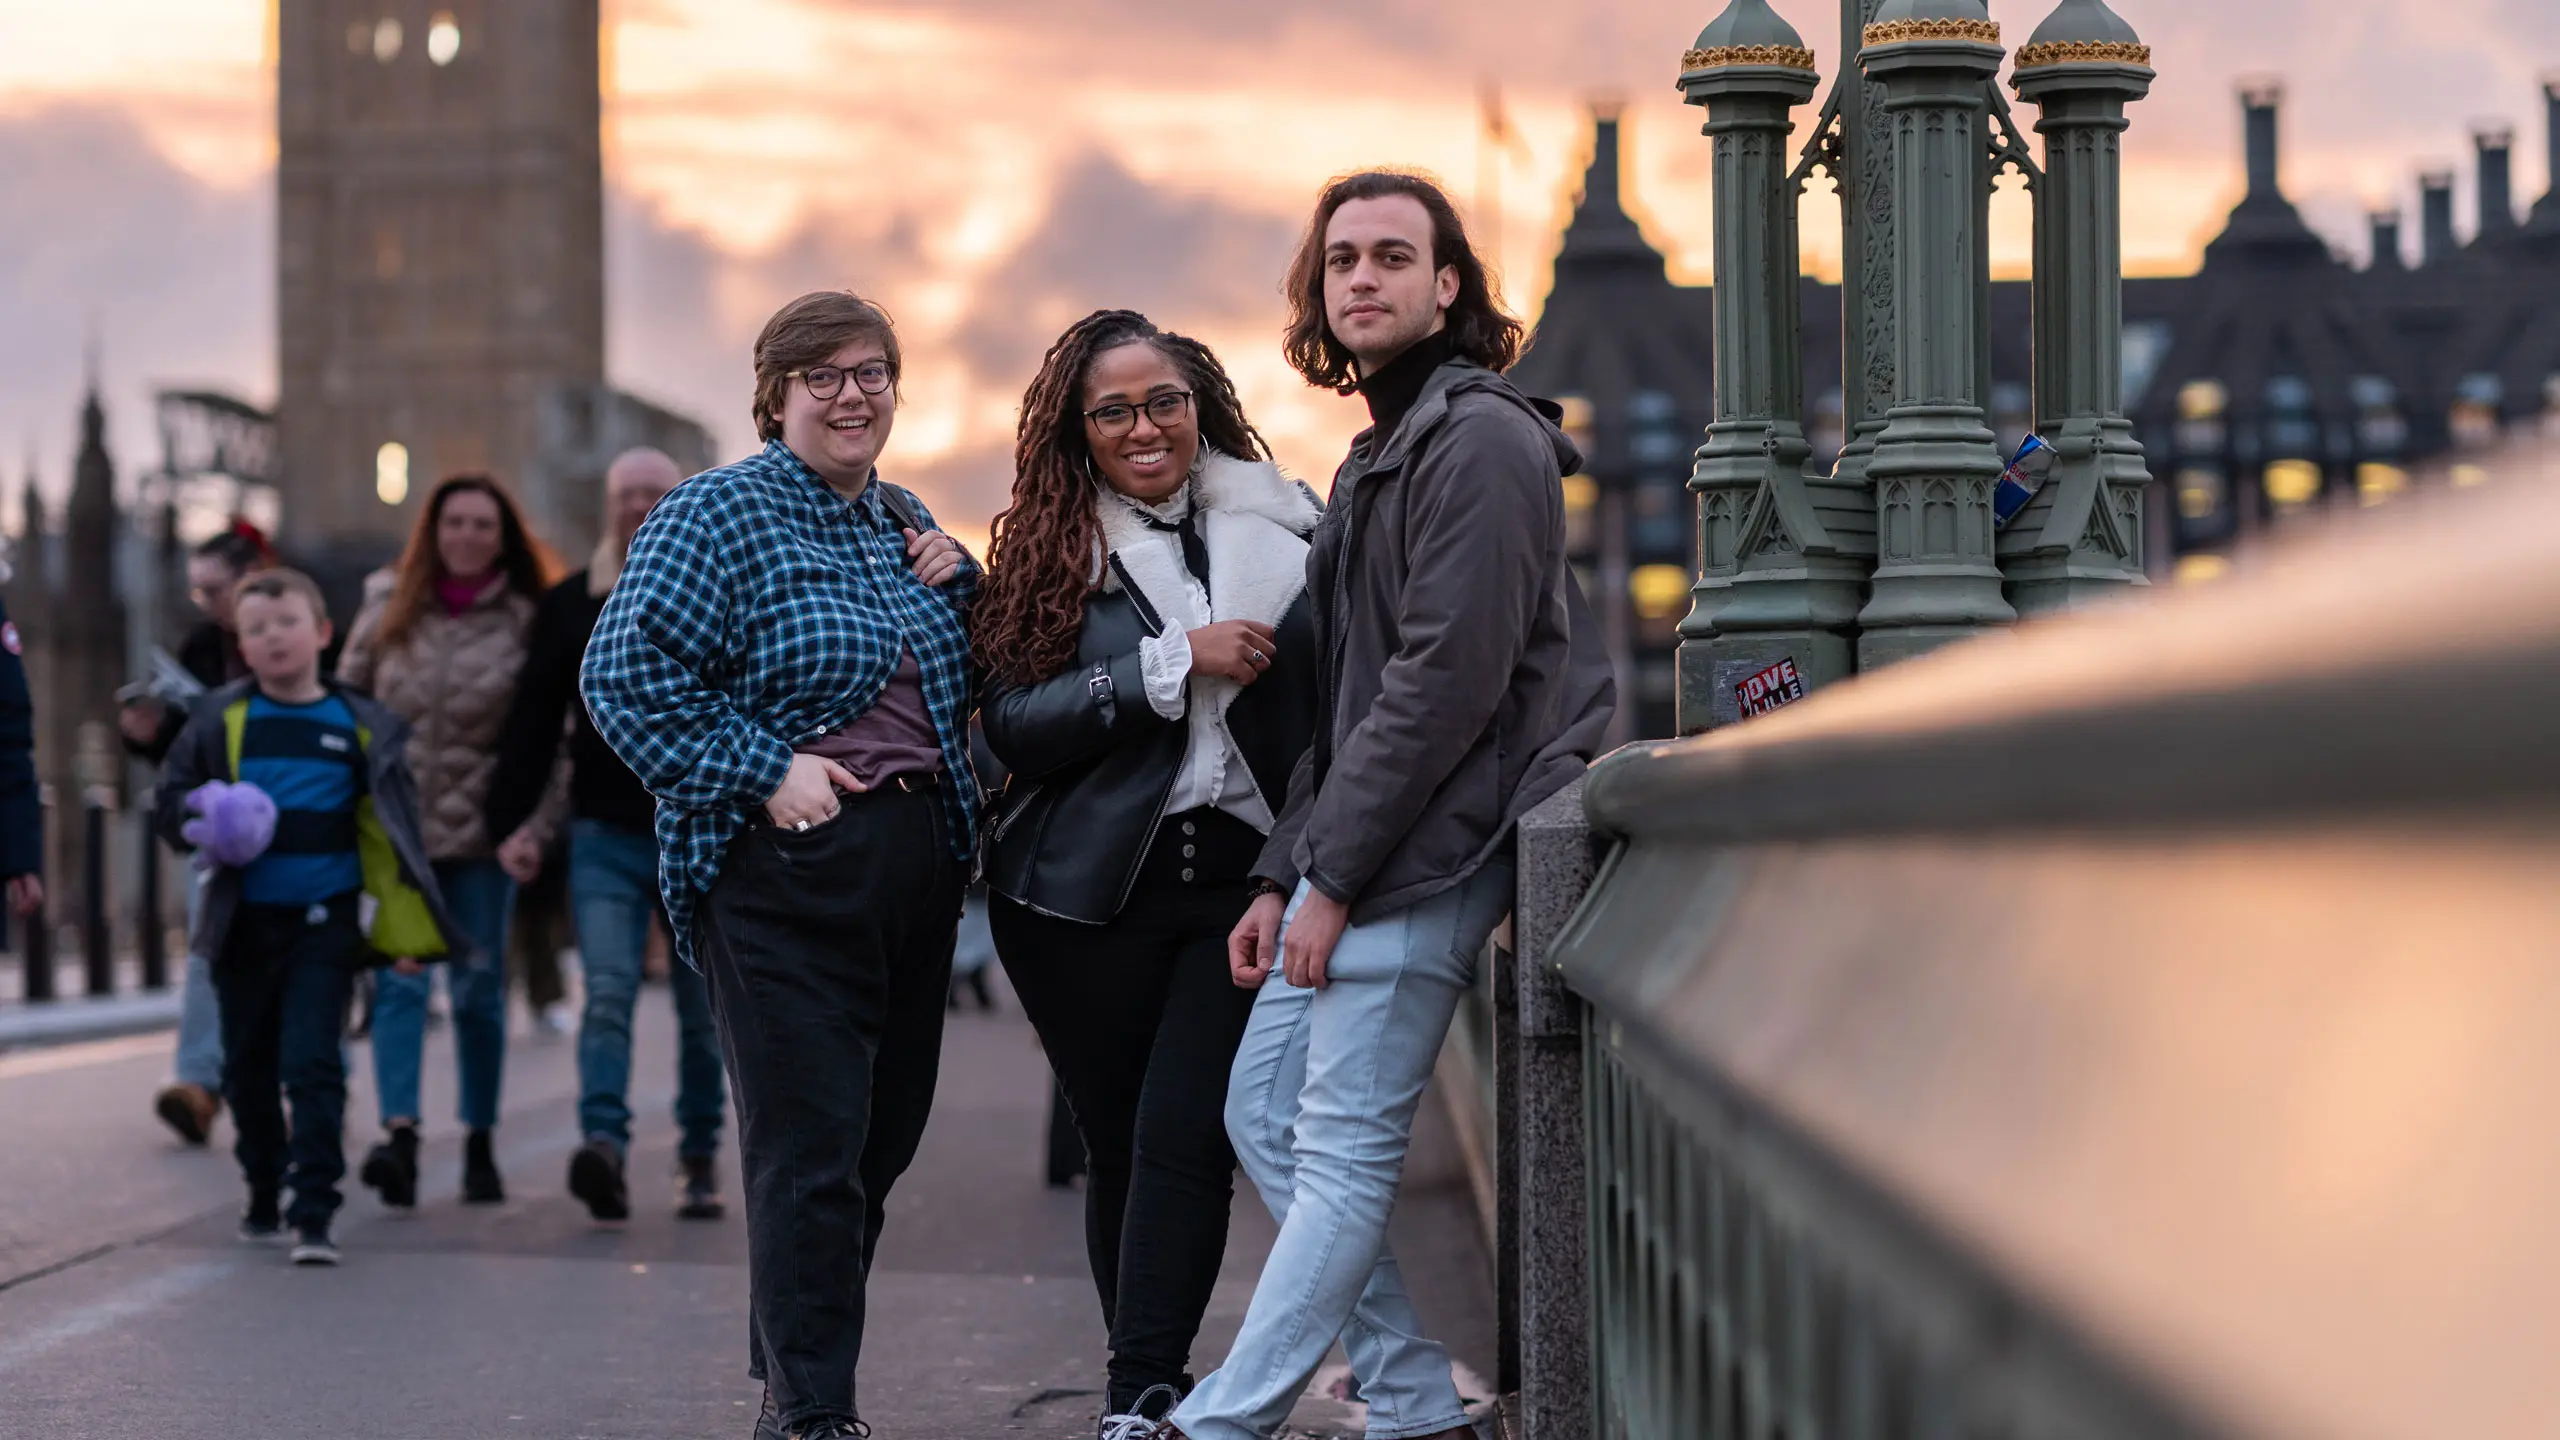 Students studying abroad pose on London bridge.